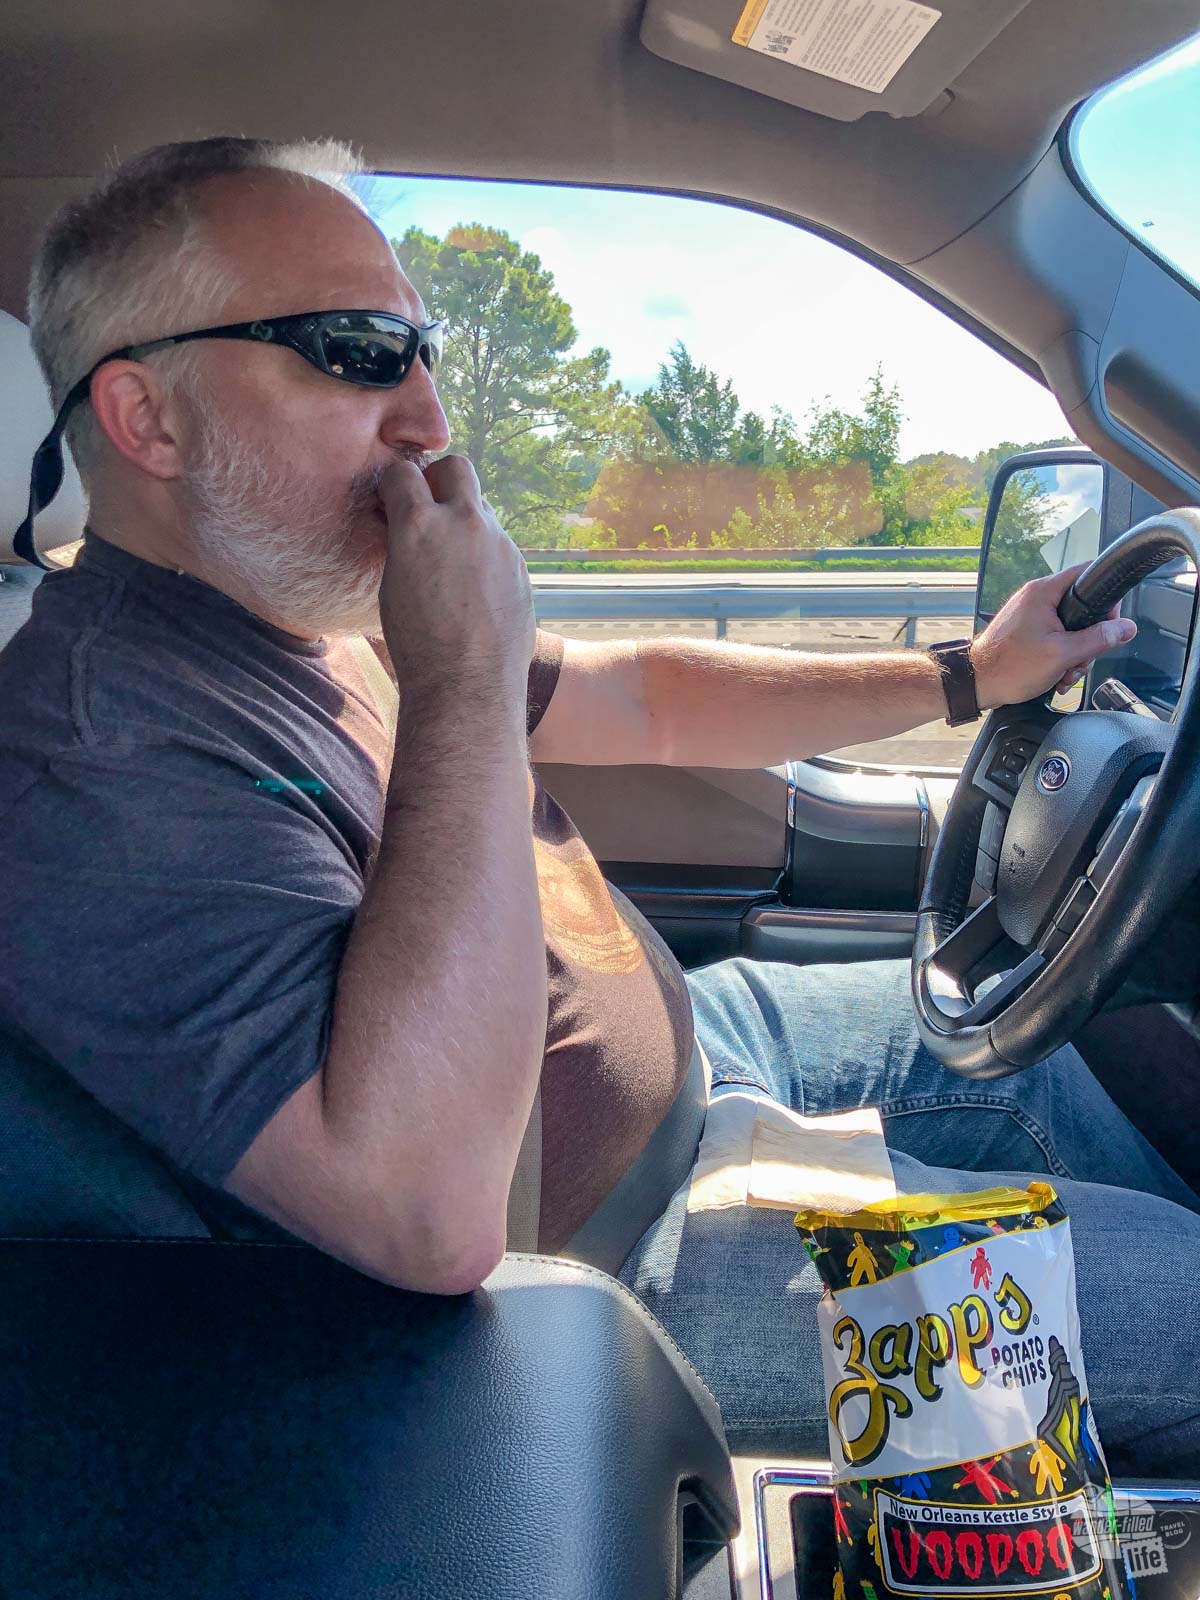 One of Grant's favorite road trip snacks: Zapp's Voodoo Kettle Chips